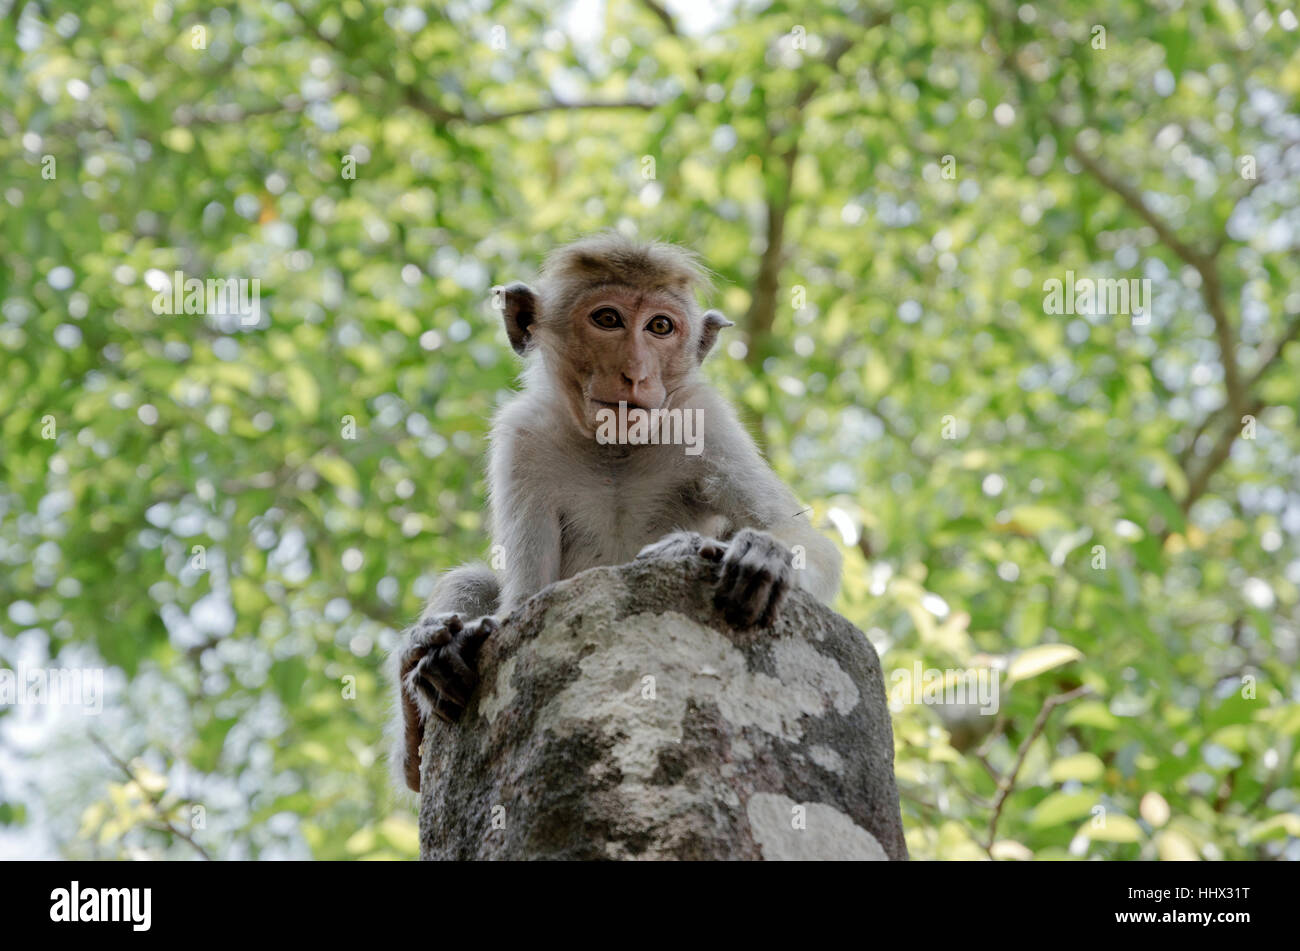 monkey, bandar, stone, monkey, radio silence, quietness, silence, pillar  Stock Photo - Alamy